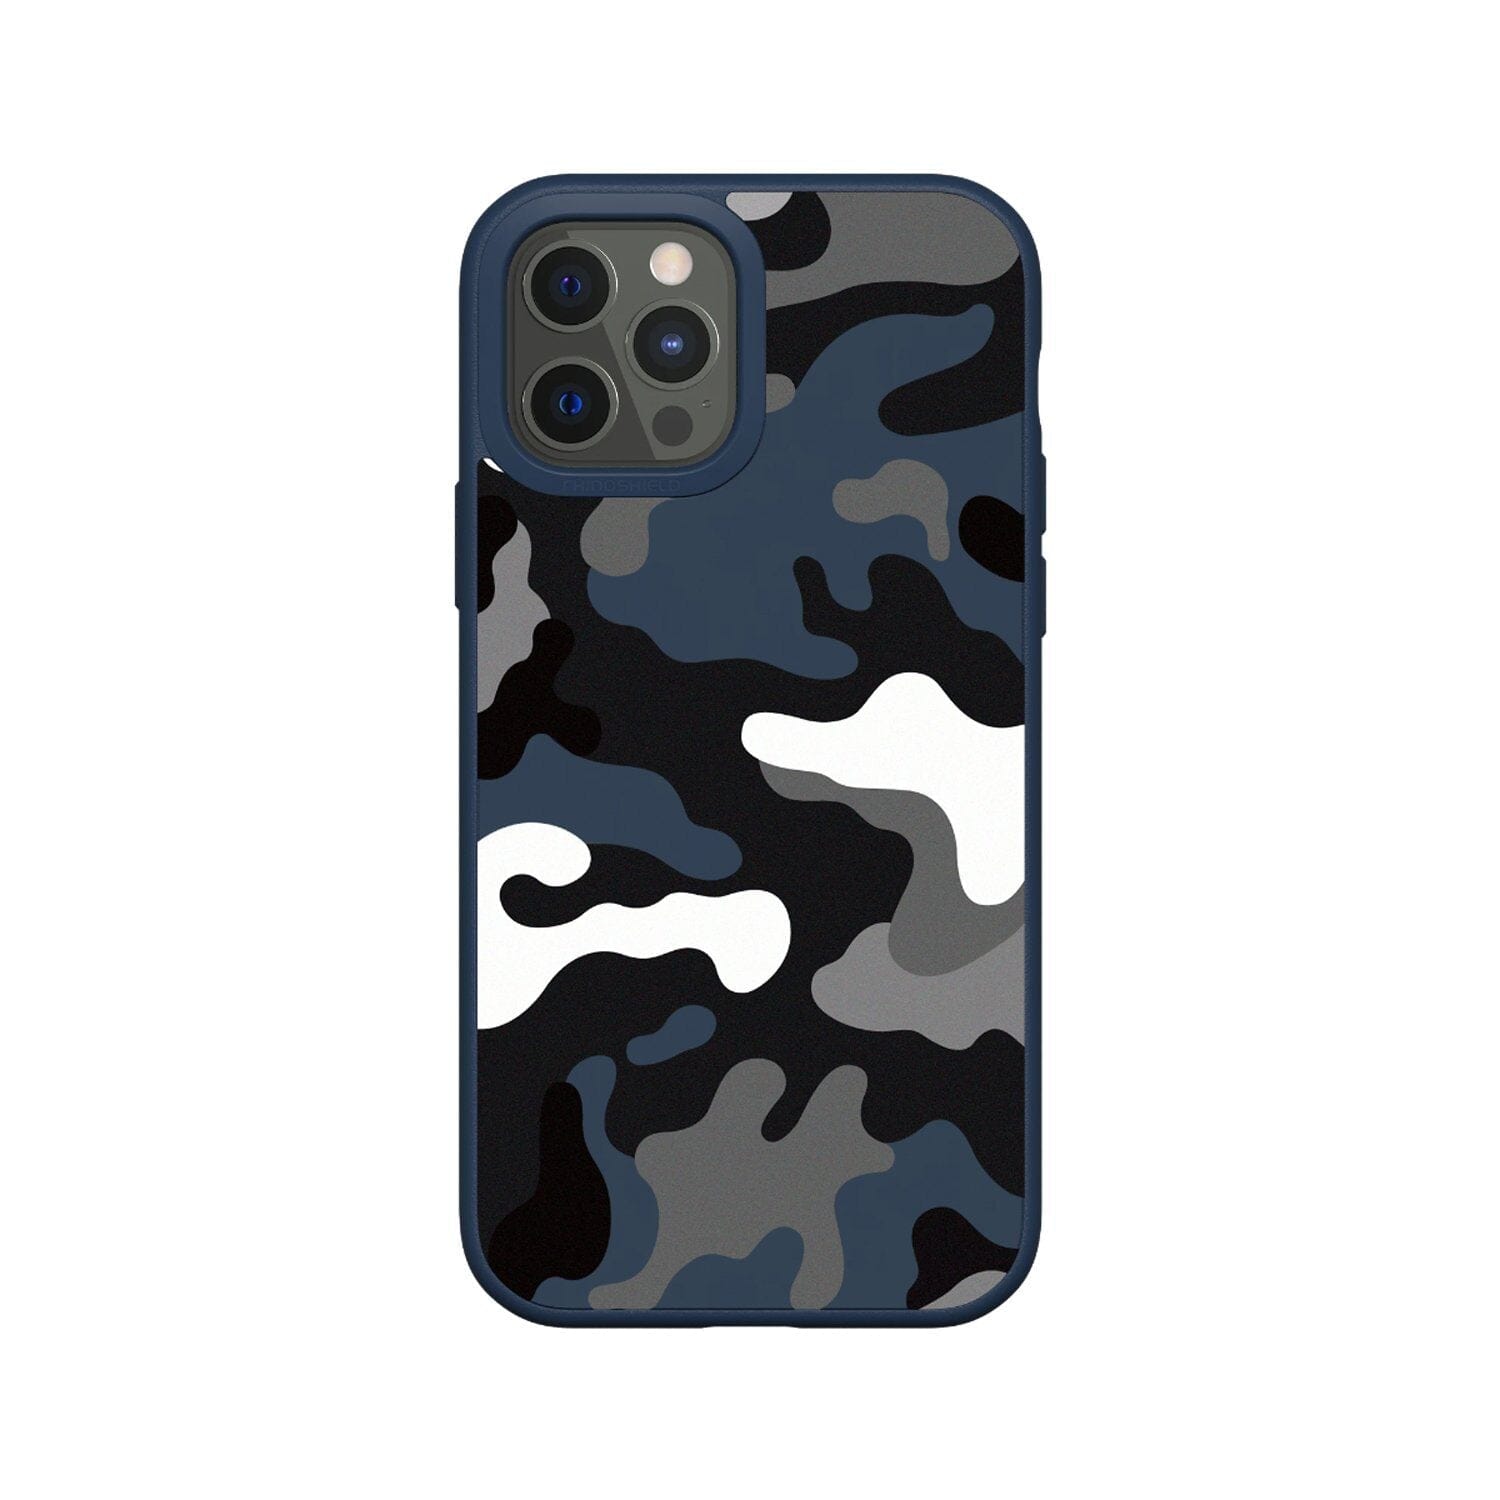 RhinoShield SolidSuit Design Case for iPhone 12 Series (2020) Default RhinoShield iPhone 12 Pro Max 6.7" Navy Blue/Telo Mimetico B&W Camo 